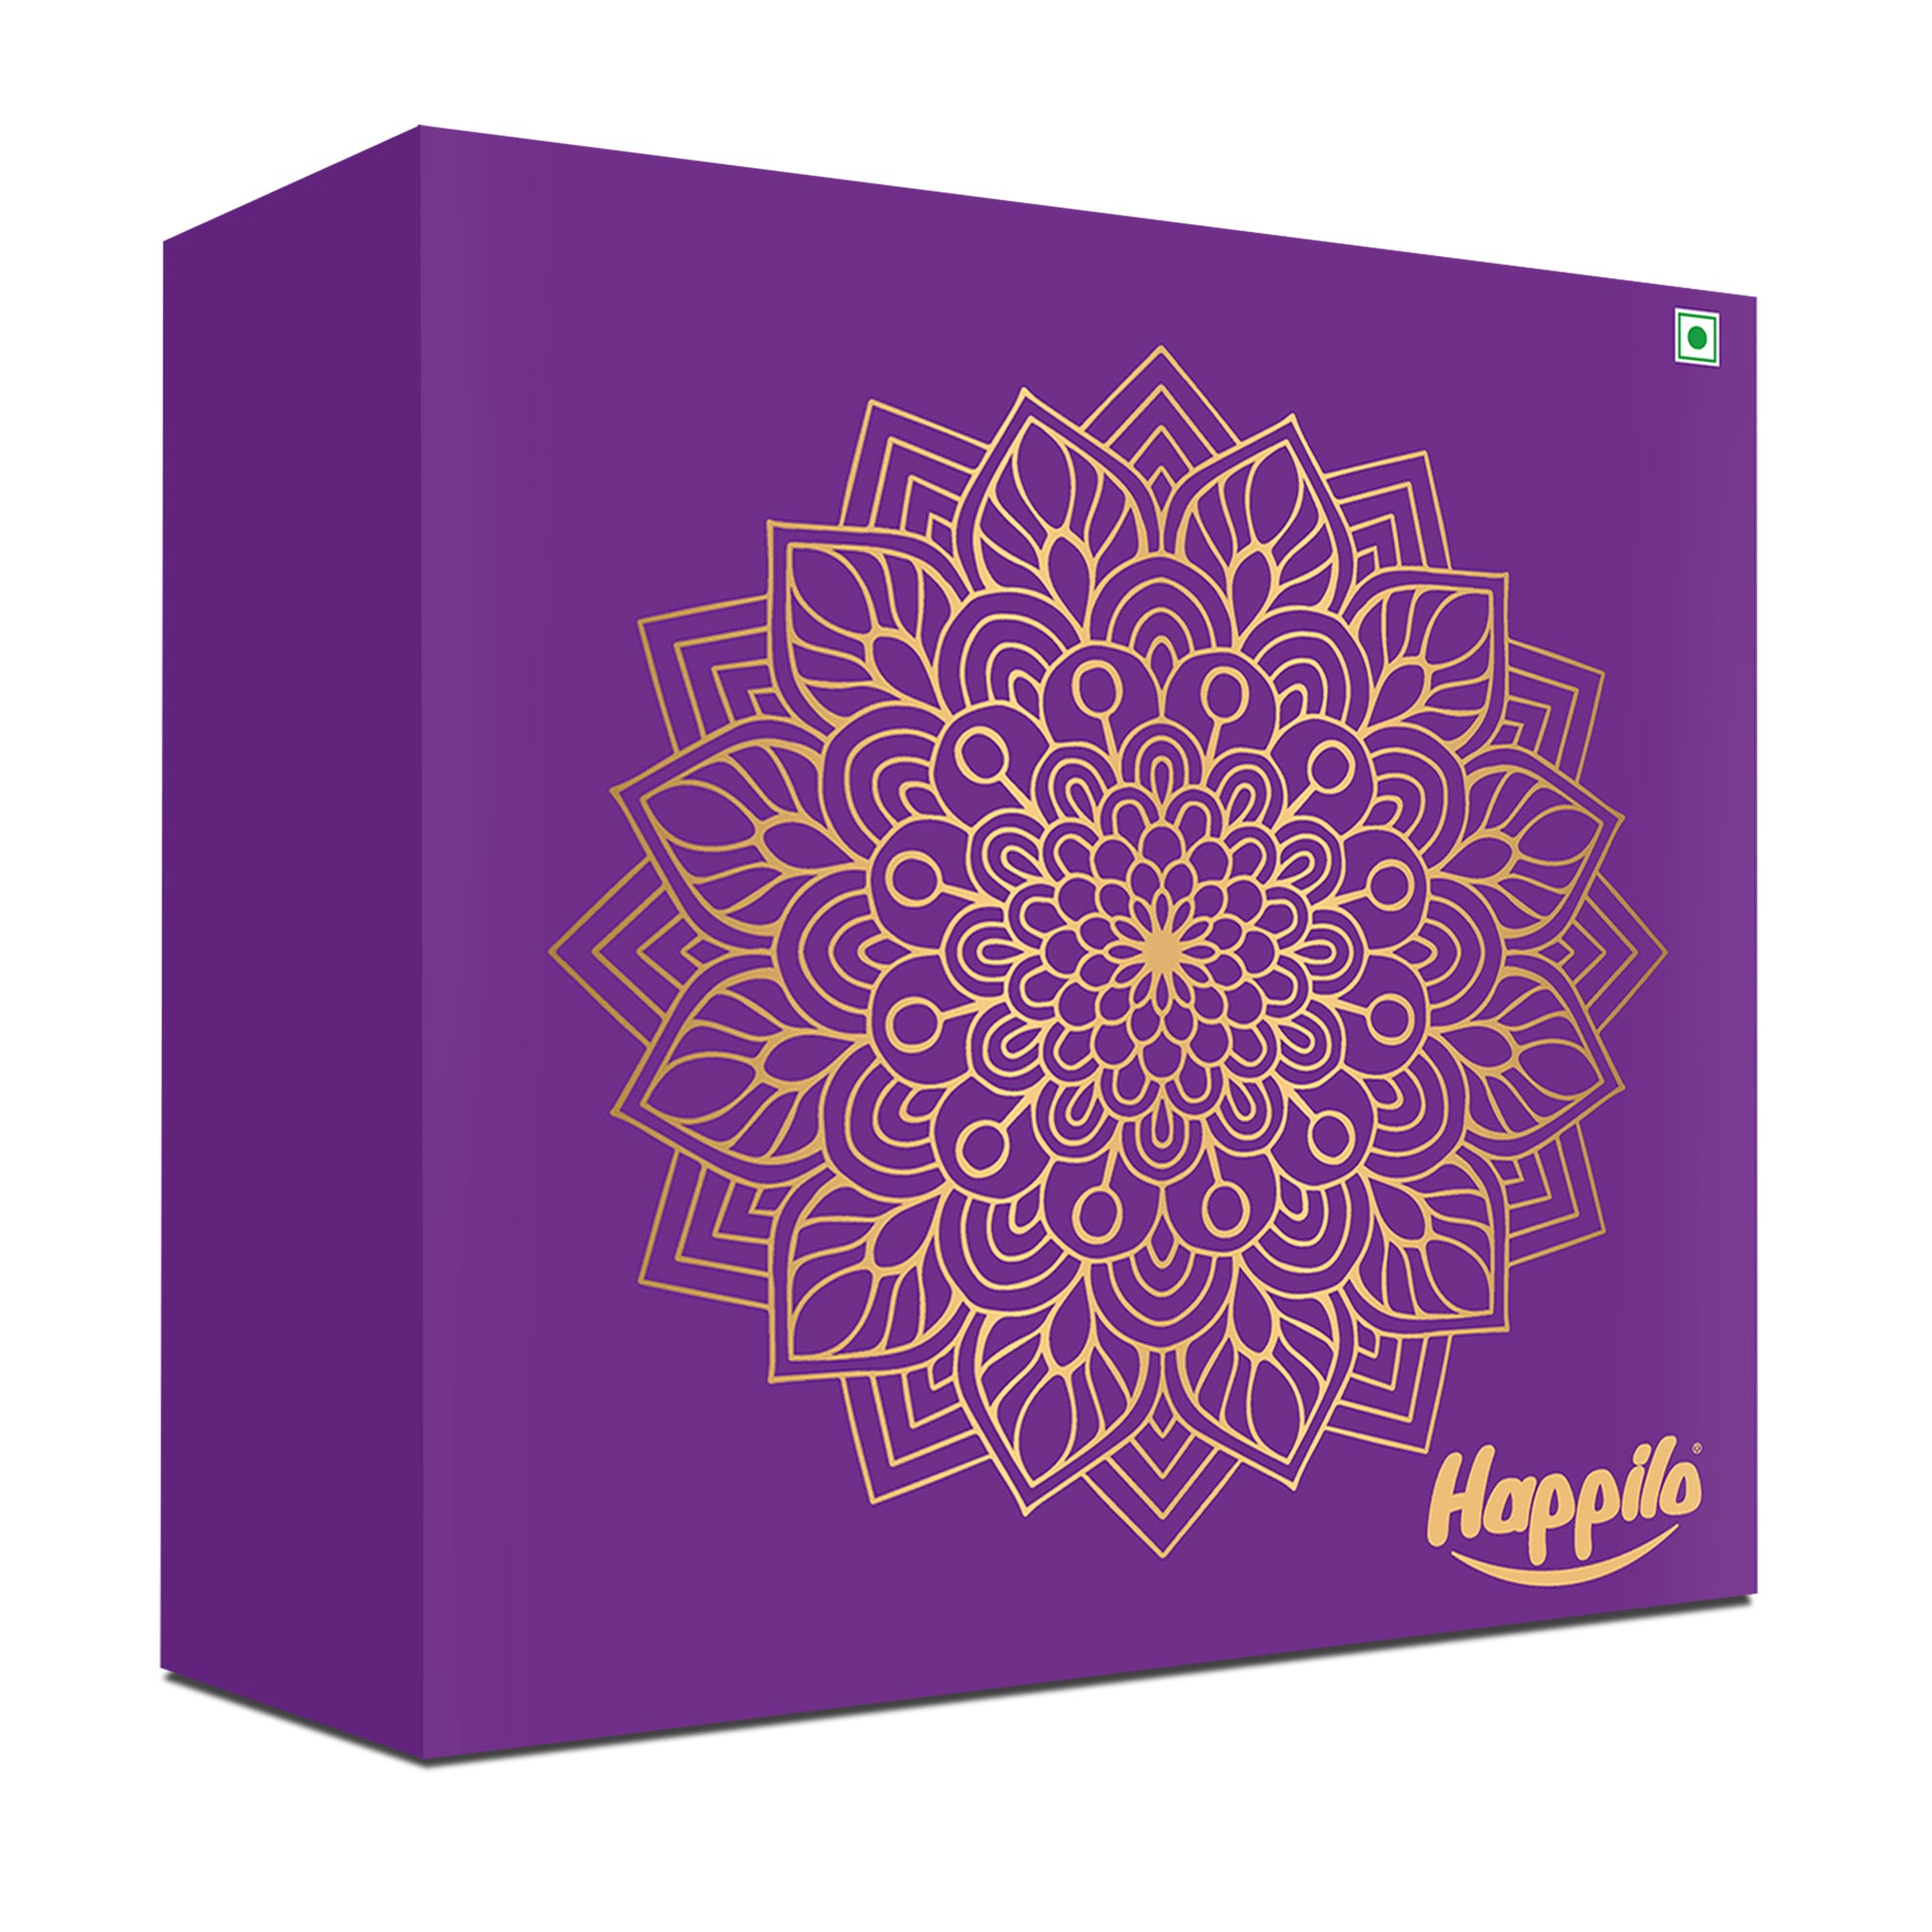 Happilo Dry Fruit Celebrations Gift Box Mars